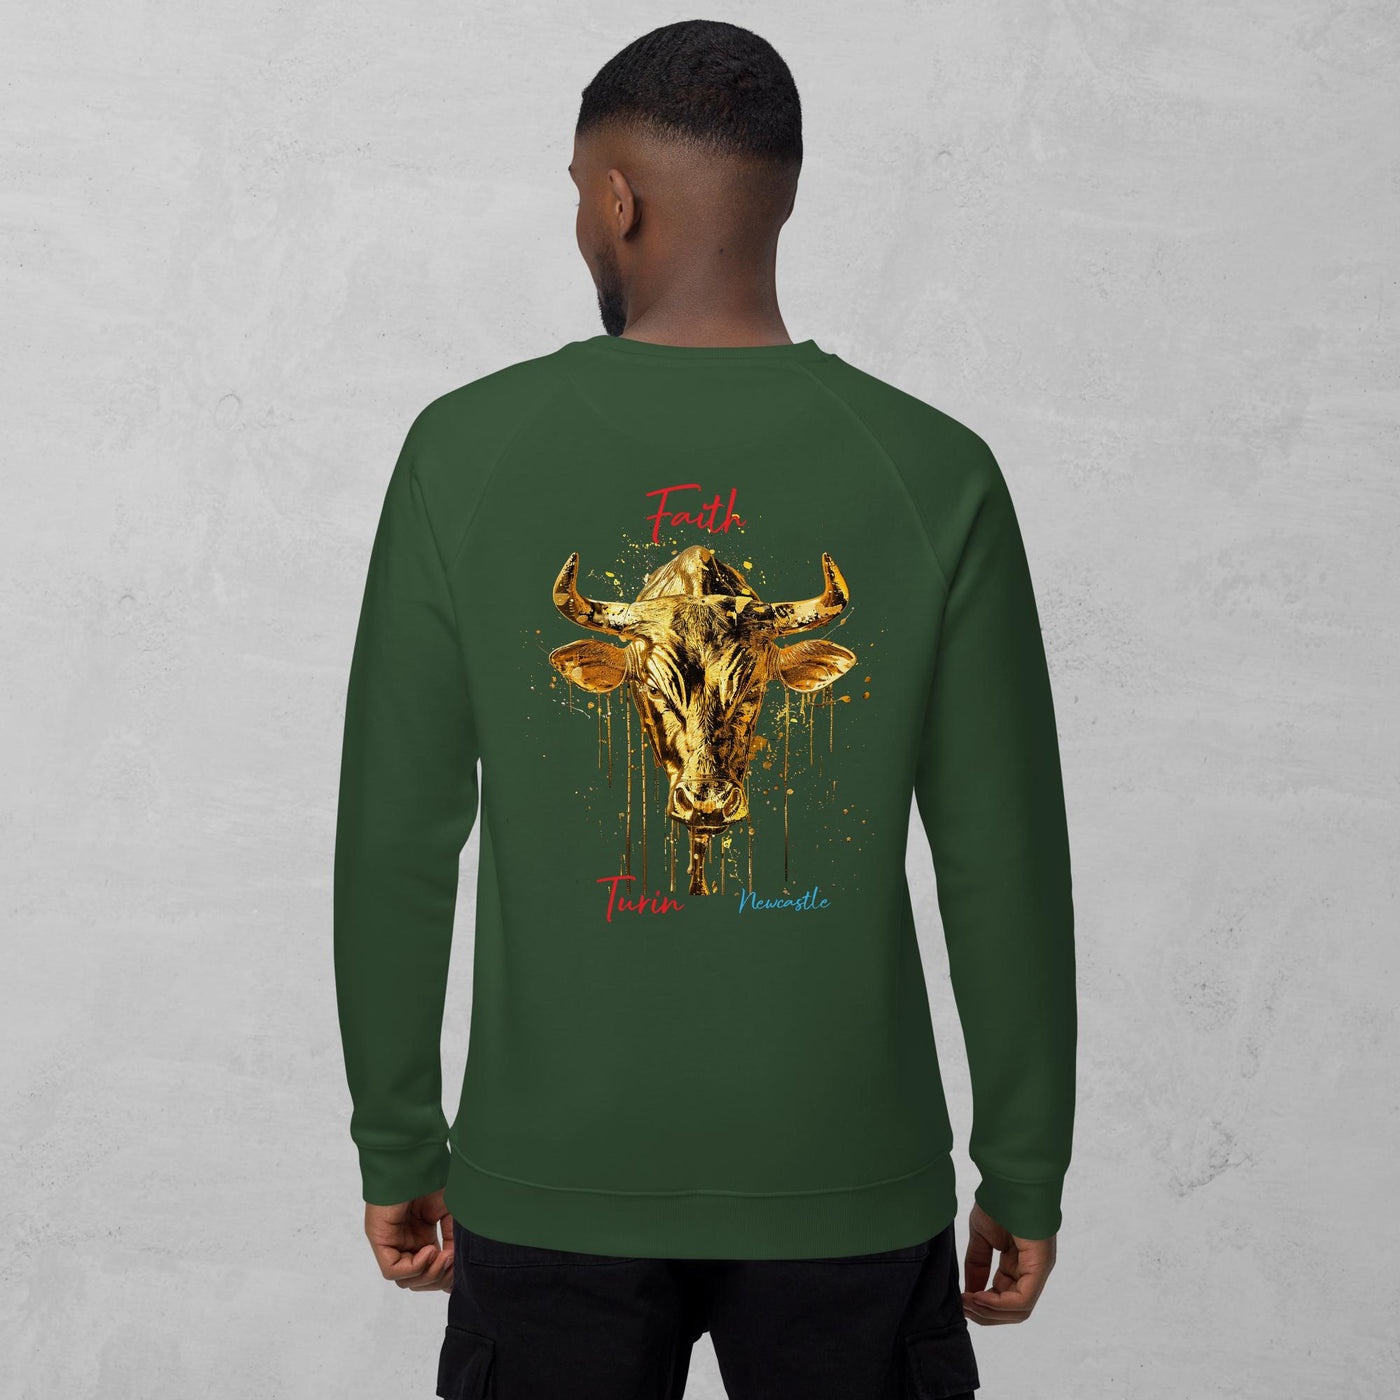 J.A Faith Gold Bull- Men's organic raglan sweatshirt